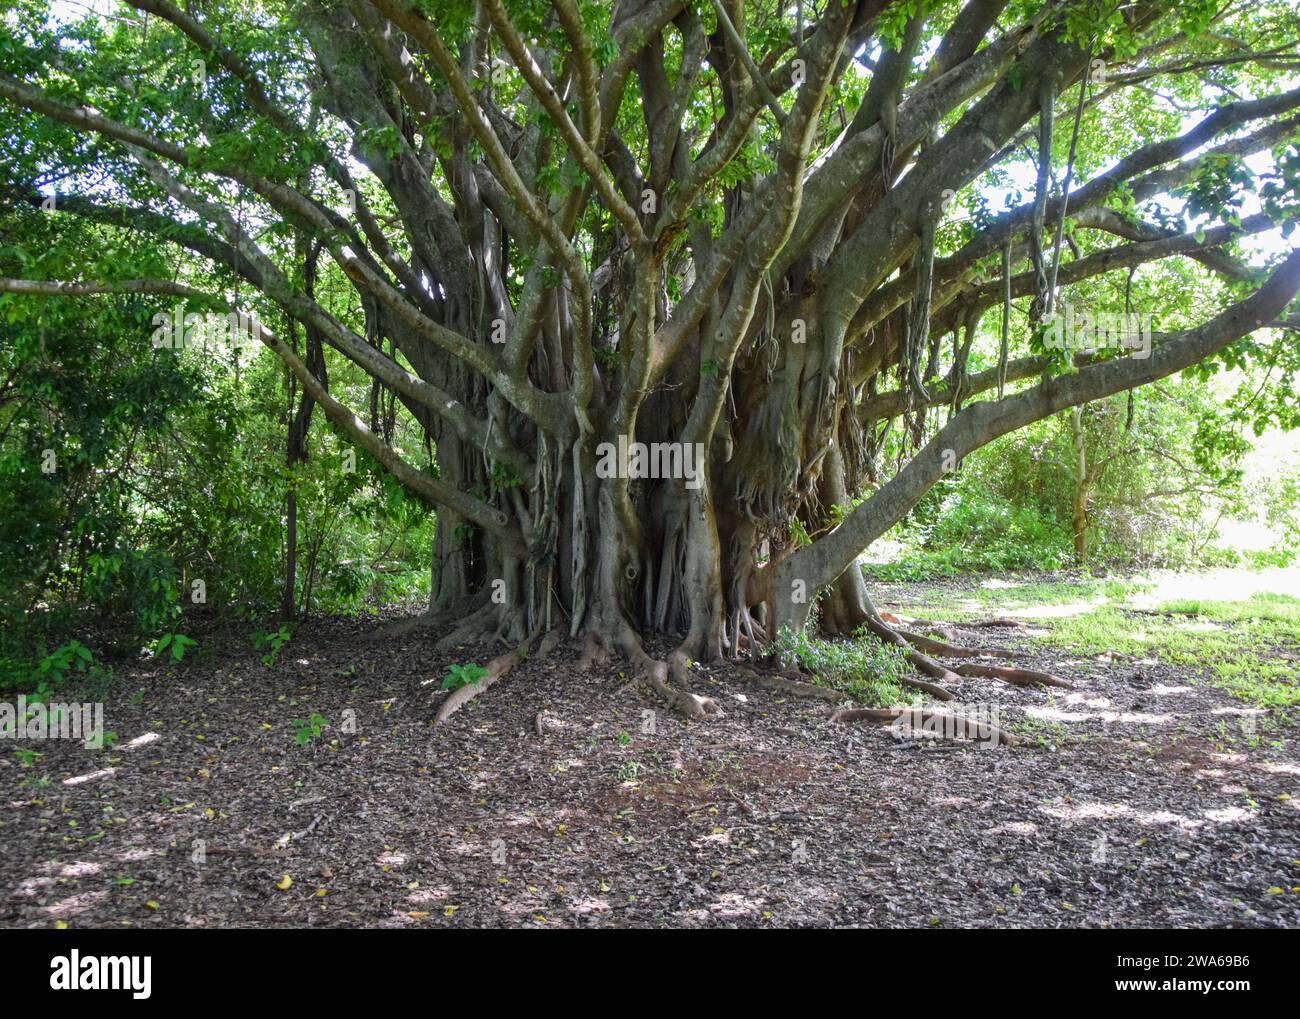 Ficus chirindensis fig tree in Zimbabwe. Credit: Vuk Valcic/Alamy Stock Photo